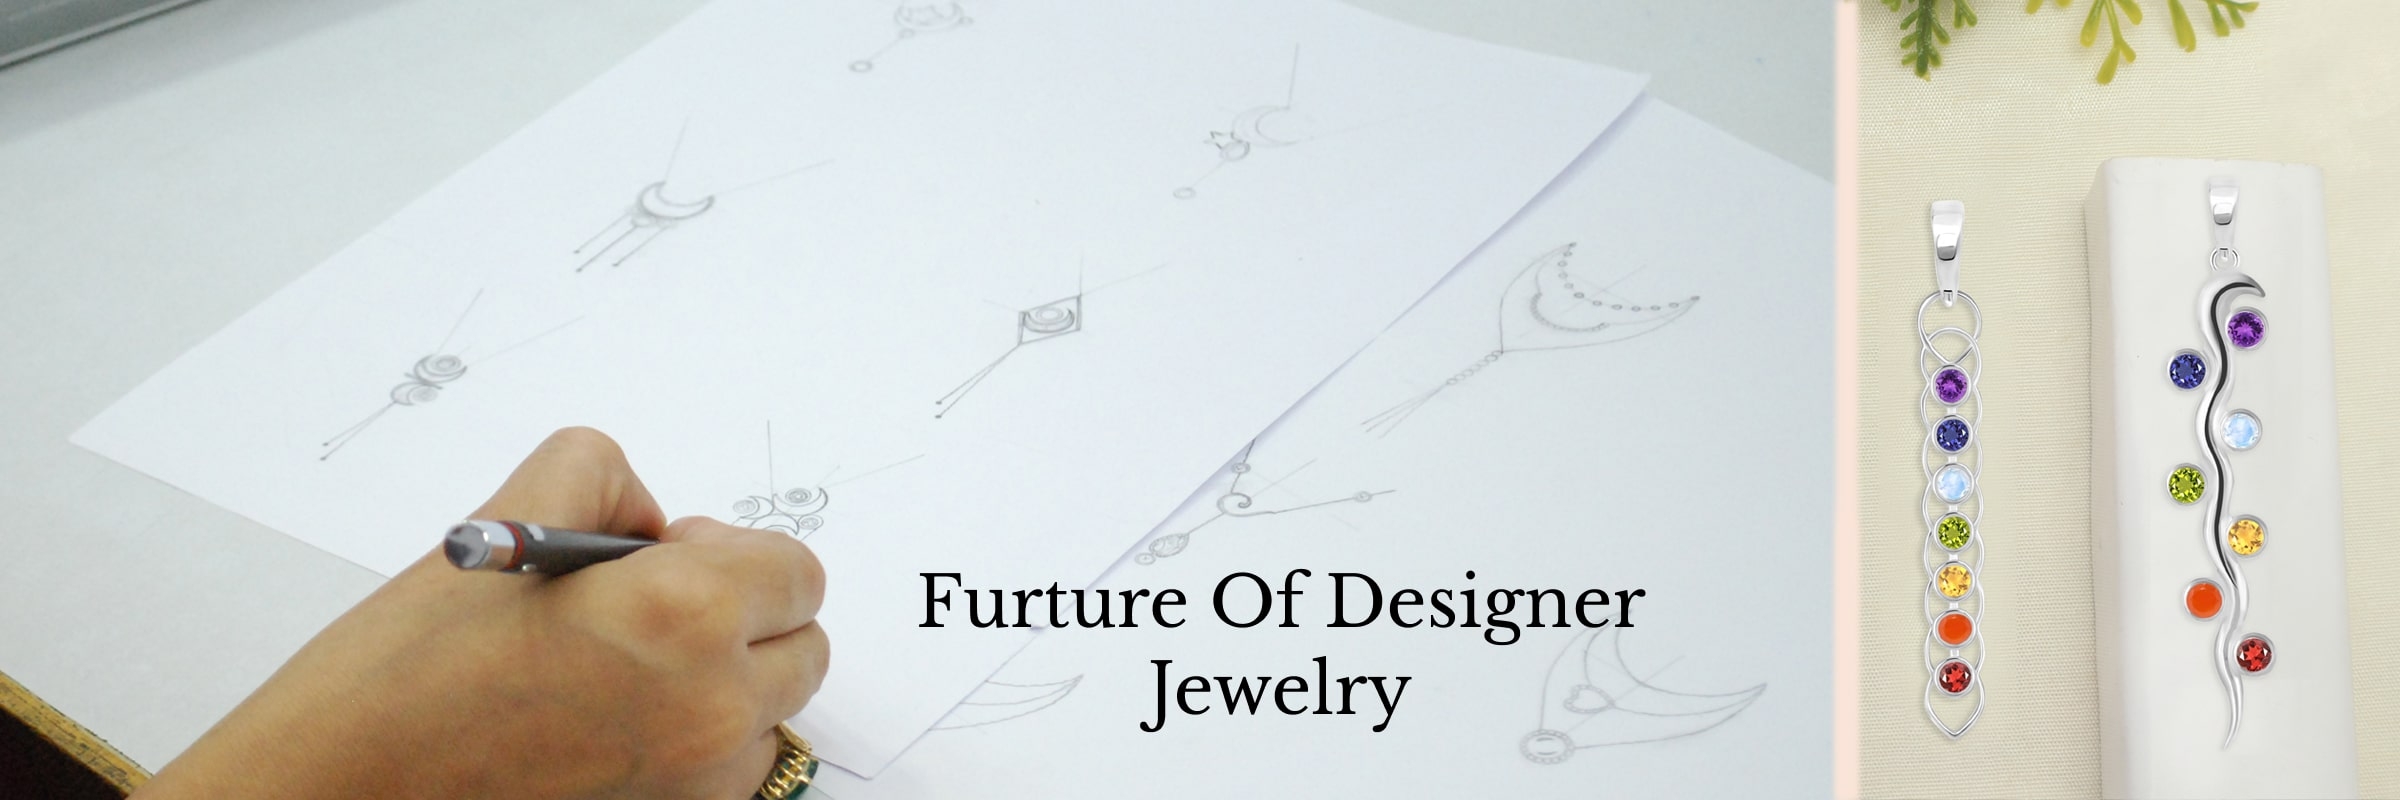 The Futuristic Vision of Designer Jewelry